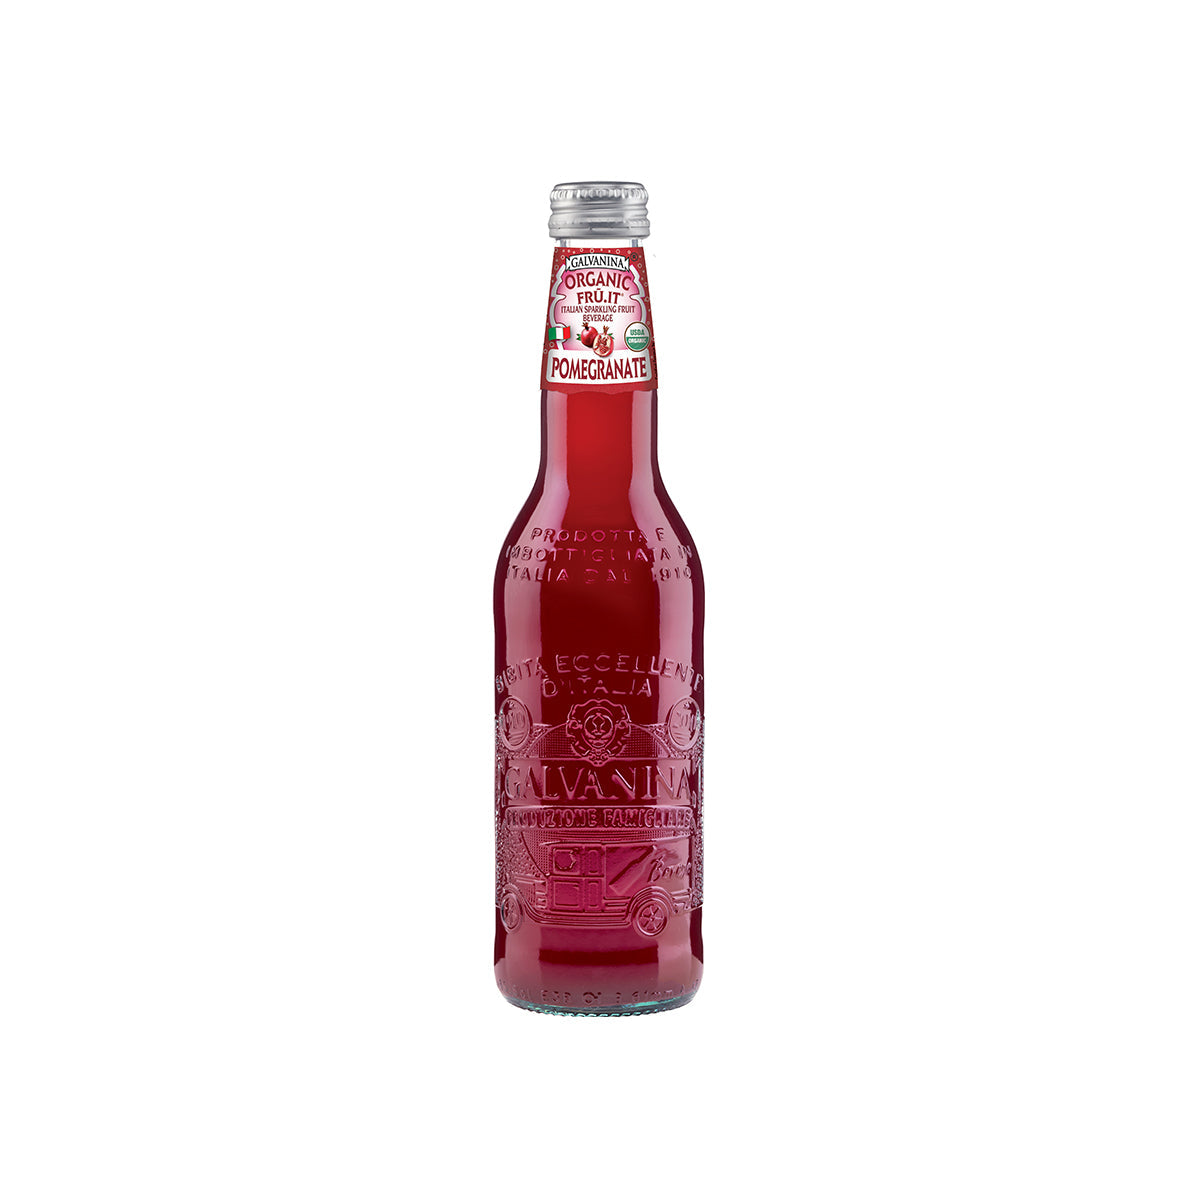 Galvanina Organic Pomegranate Sparkling Soda 12 Oz Bottle - 12 Ct